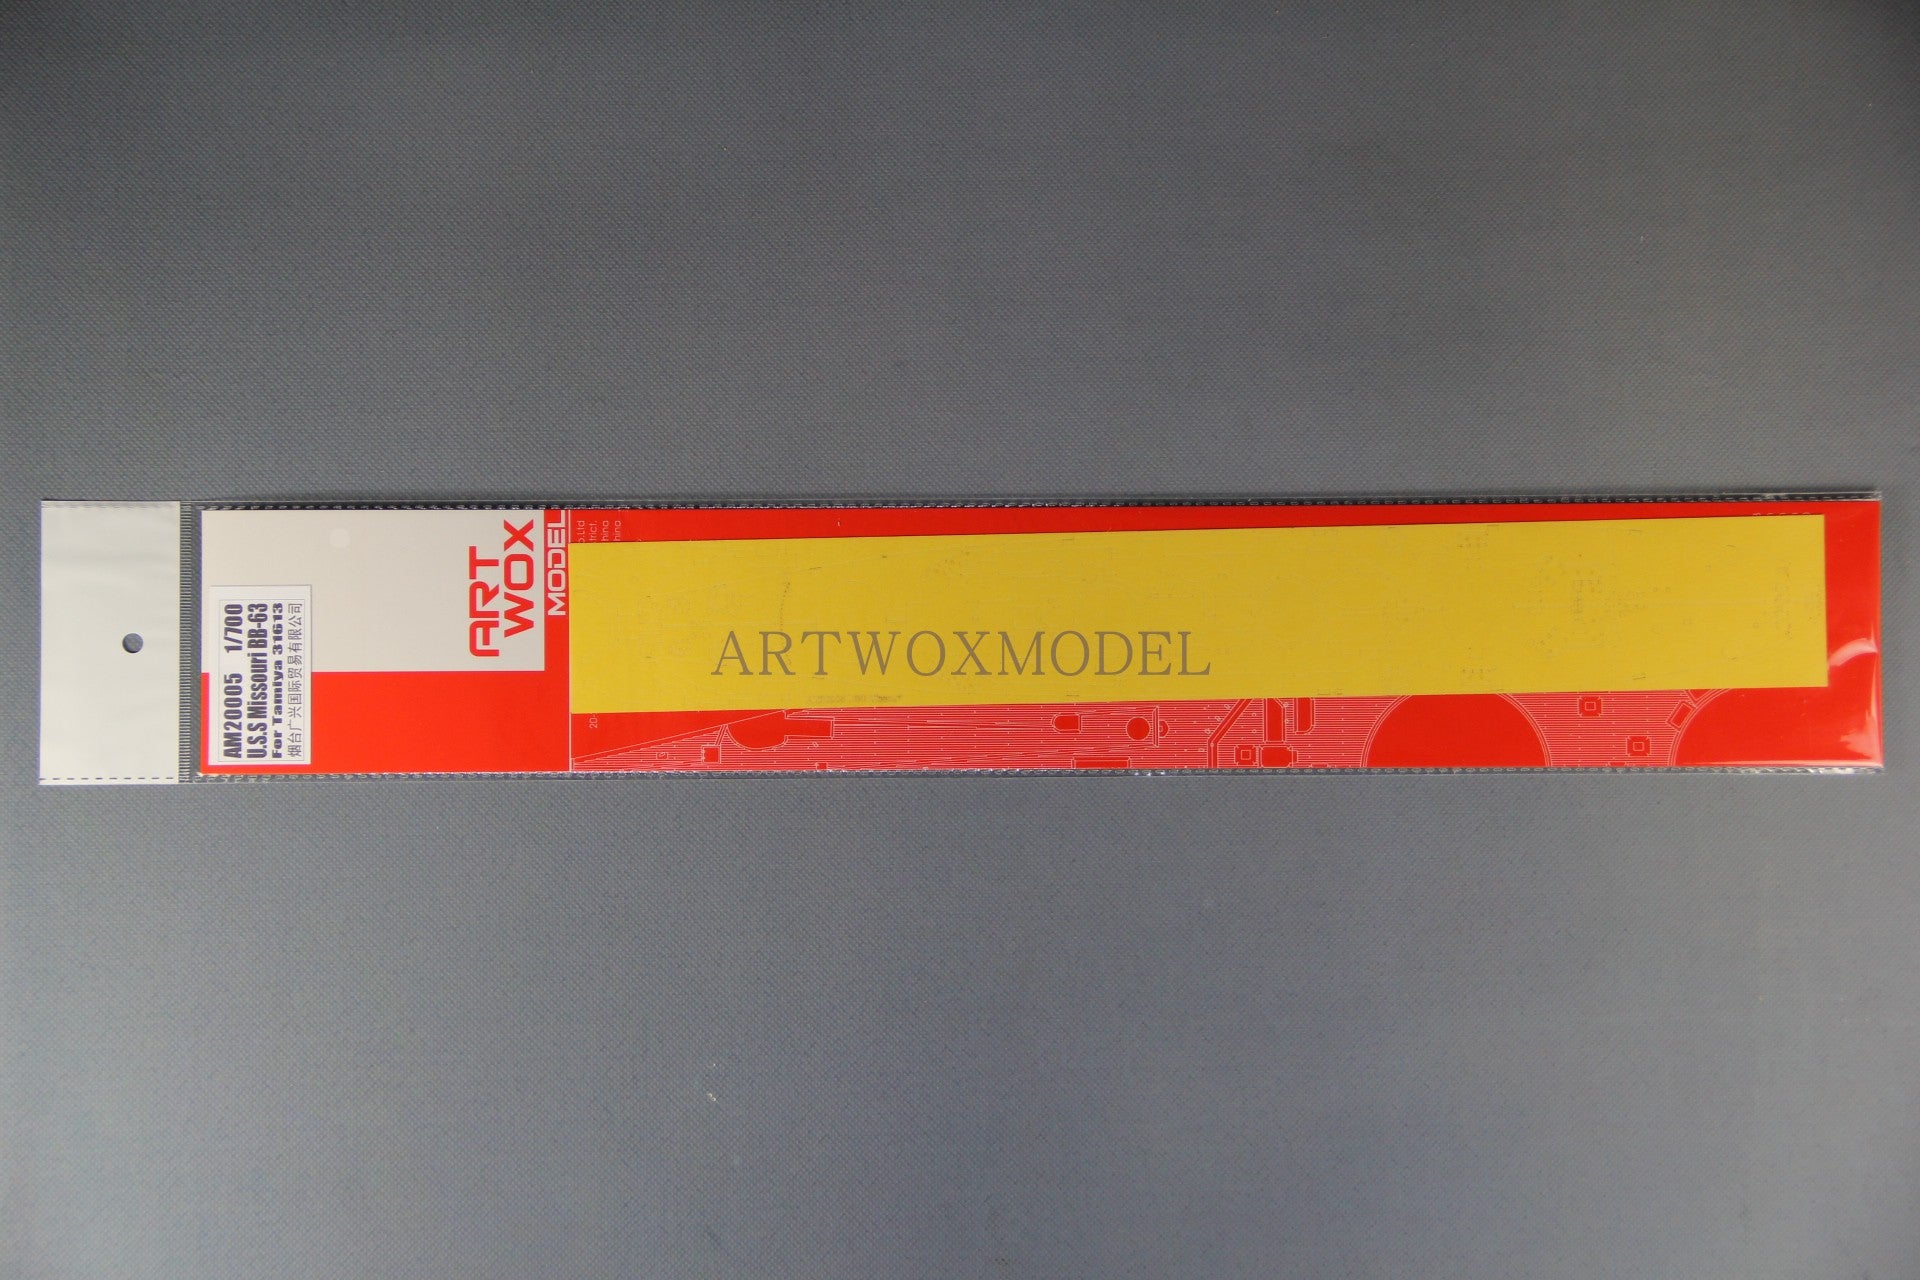 Artwox model wooden deck for Tamiya 31613 Missouri b - 63 battleship 3m cover paper am 20005